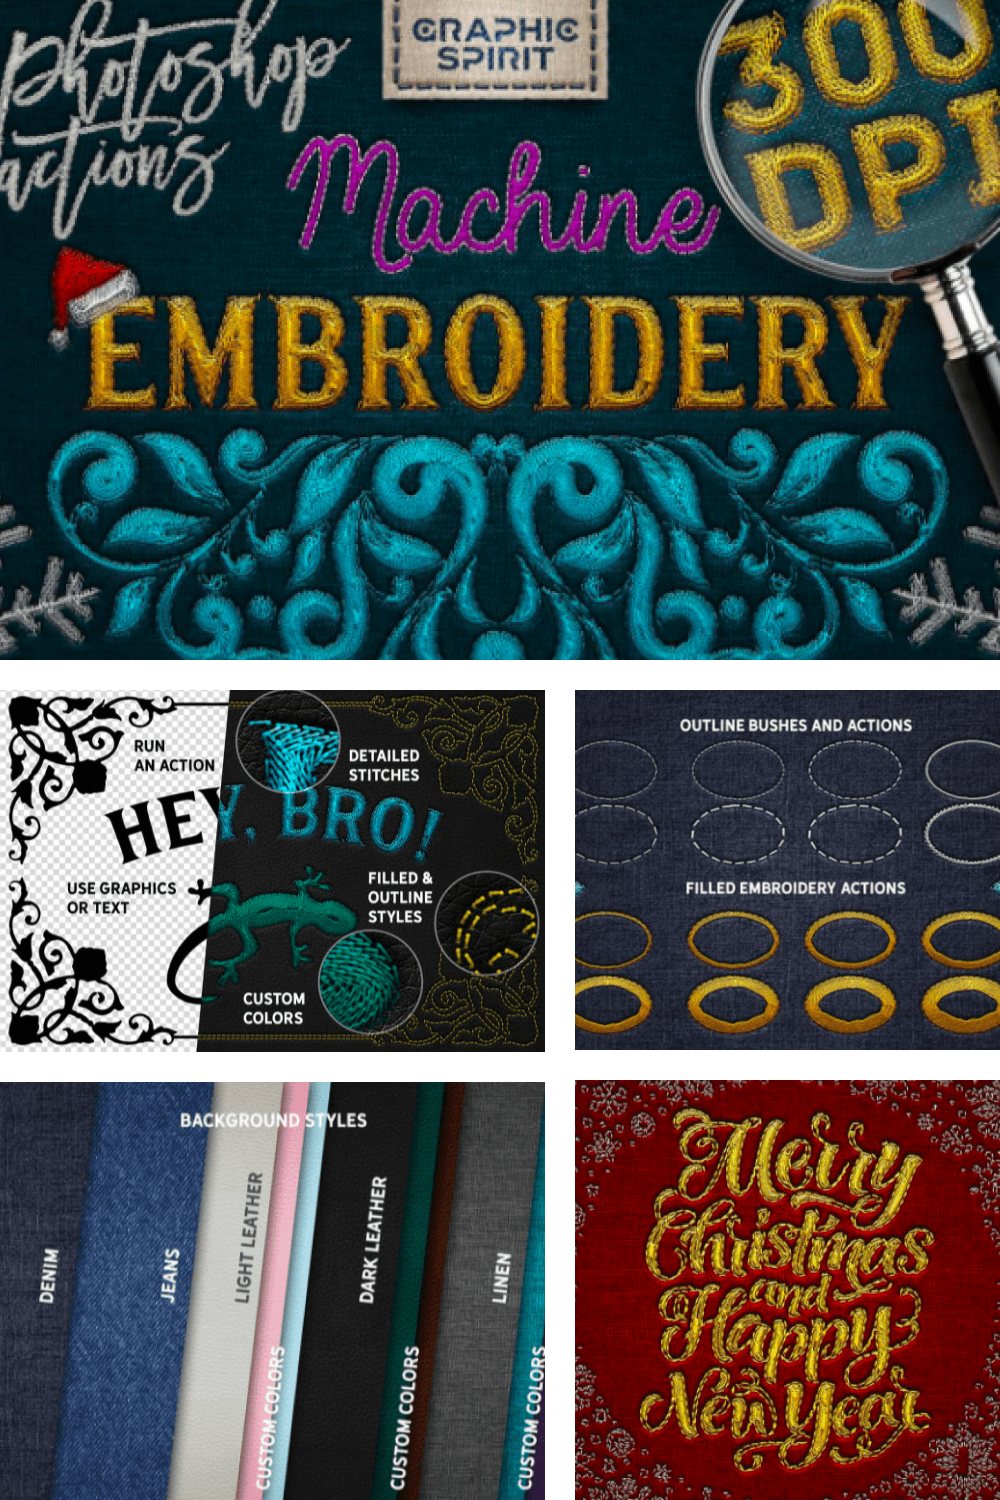 Machine Embroidery Photoshop Actions - $14 - MasterBundles - Pinterest Collage Image.